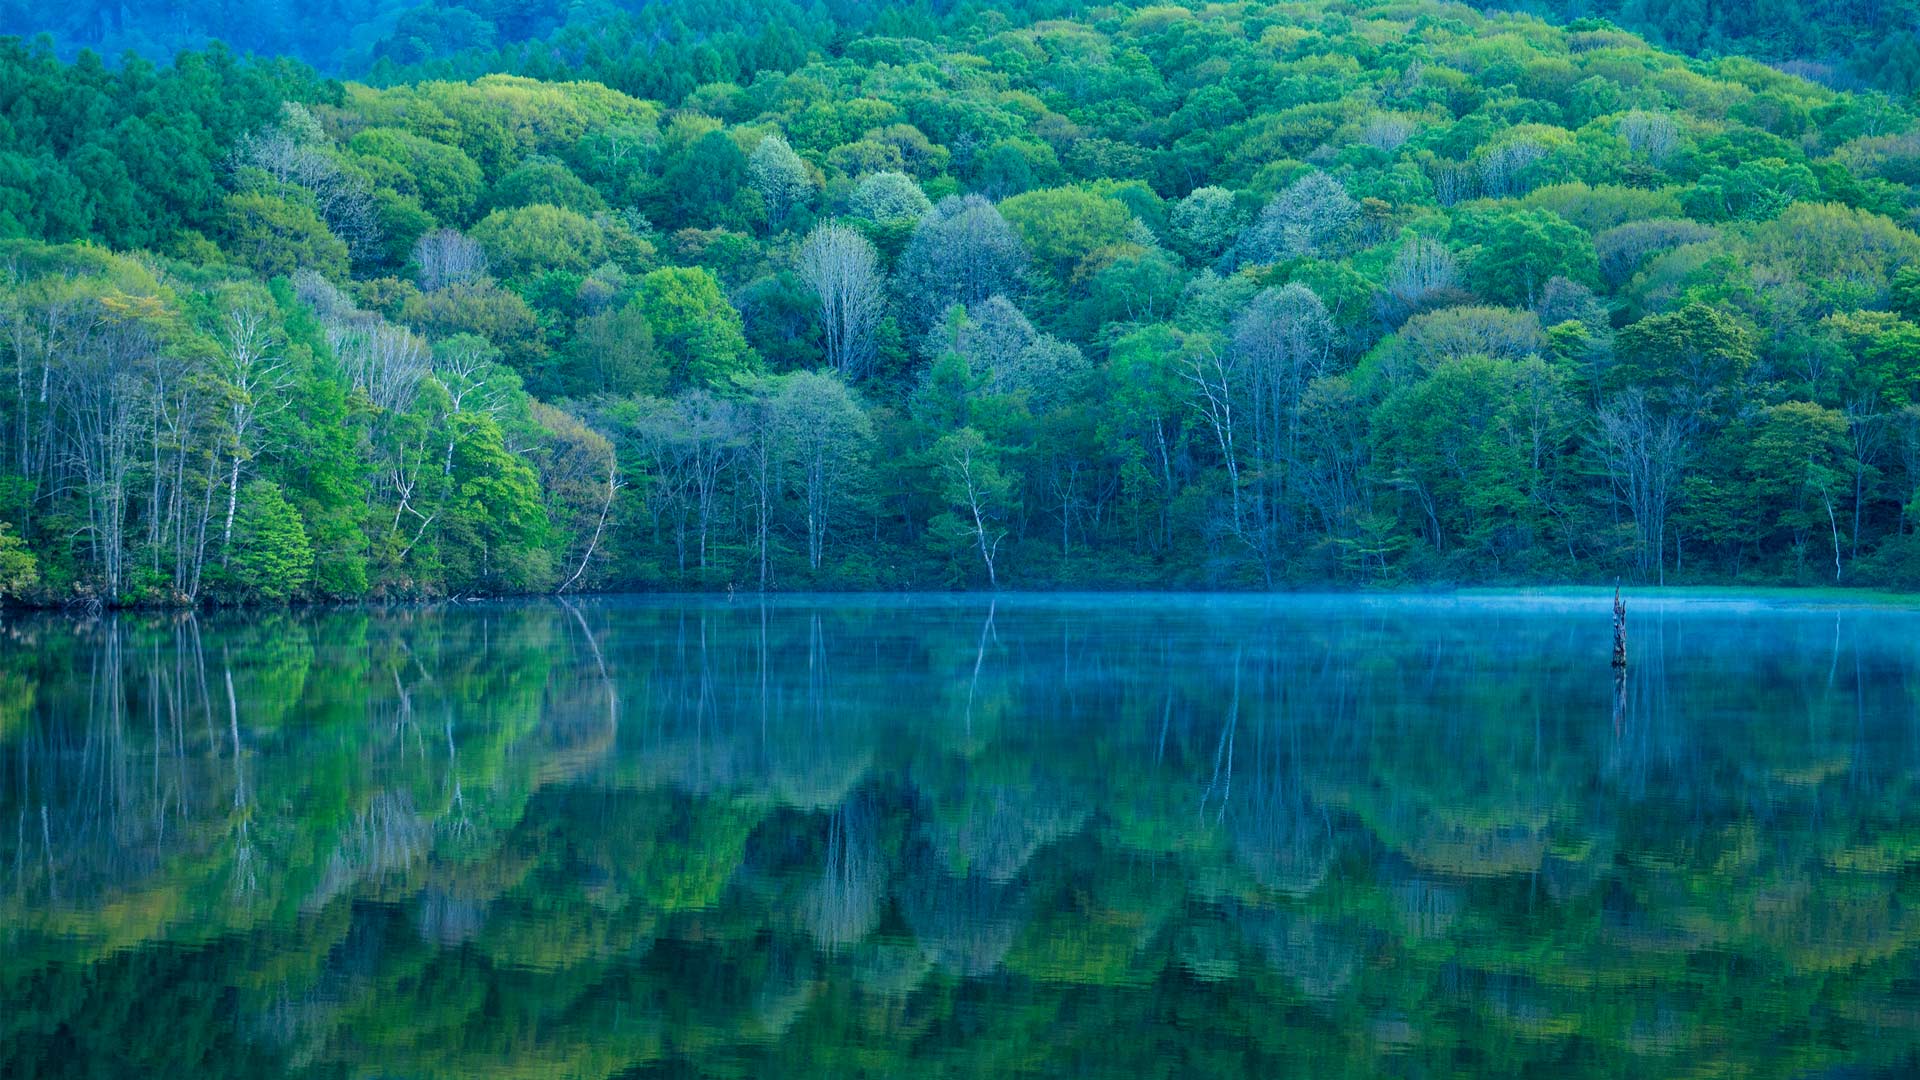 Bing HD Wallpaper : A mirror reflecting natures beauty - Bing Wallpaper ...